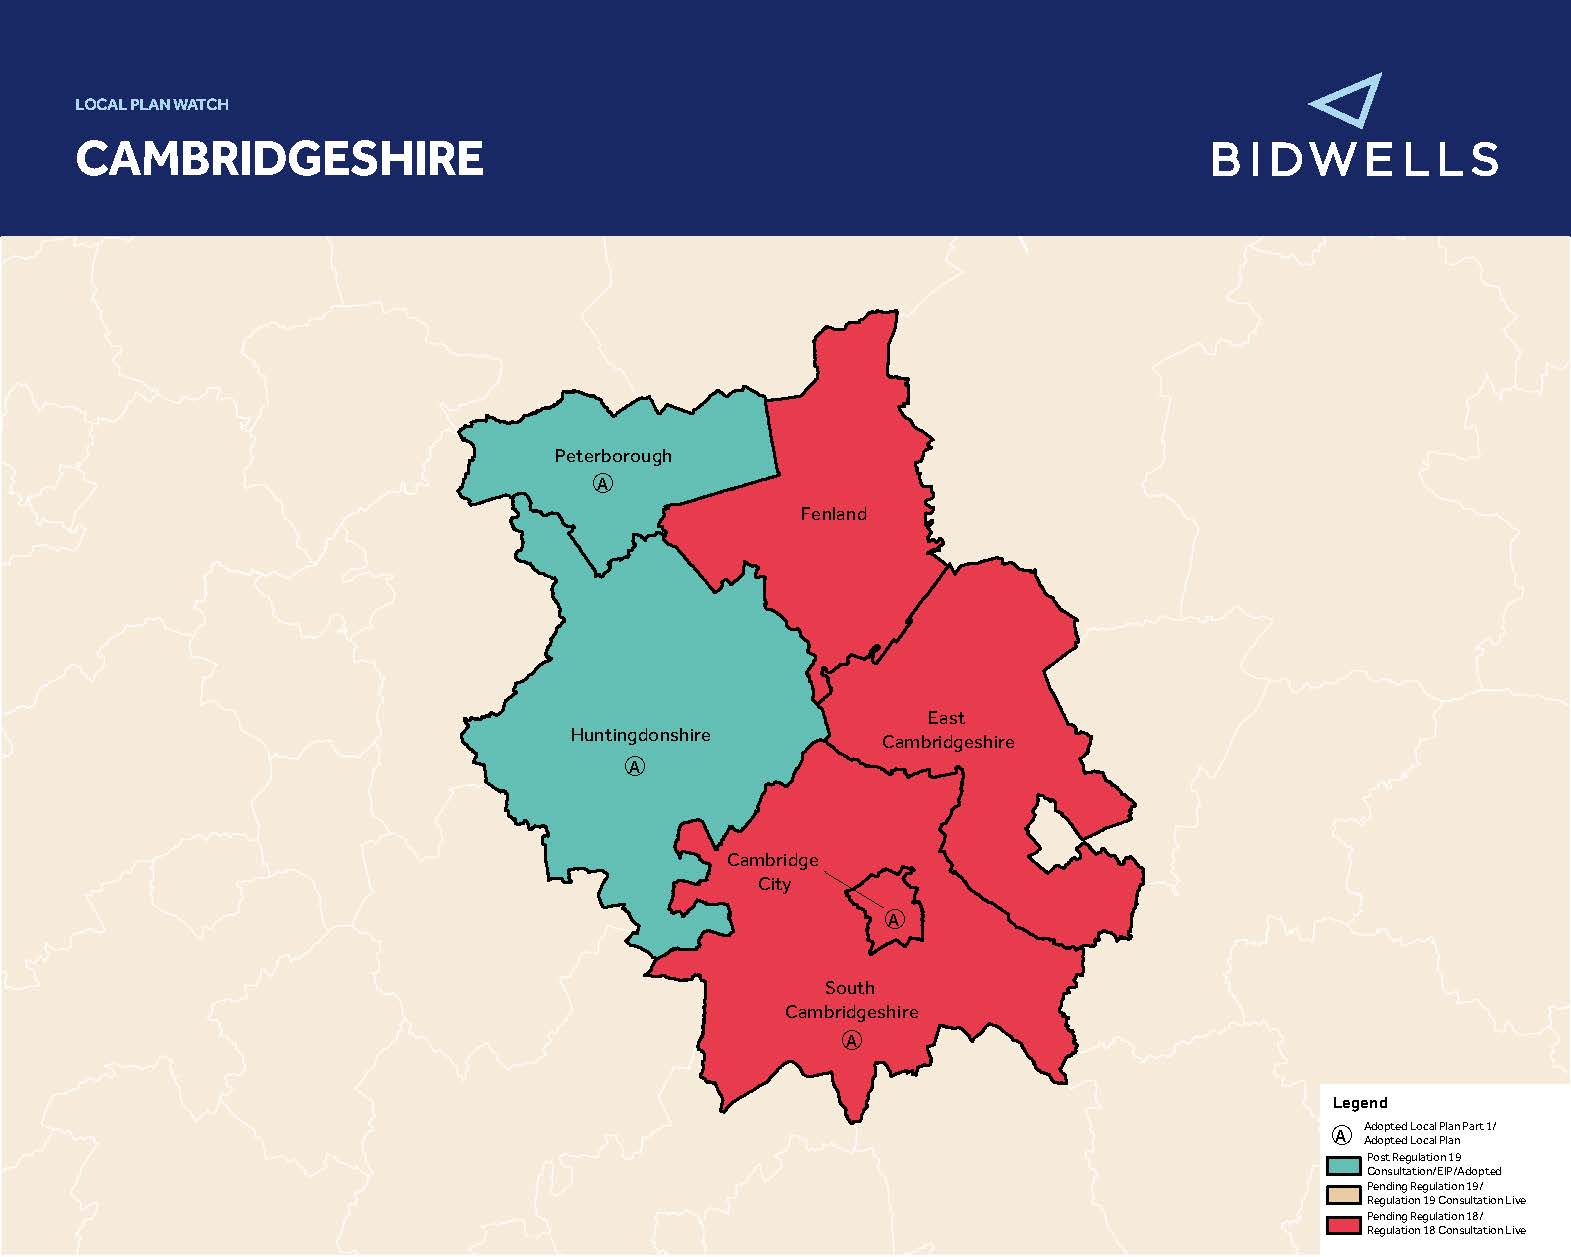 Cambridgeshire Local Plan Watch - Spring 2020